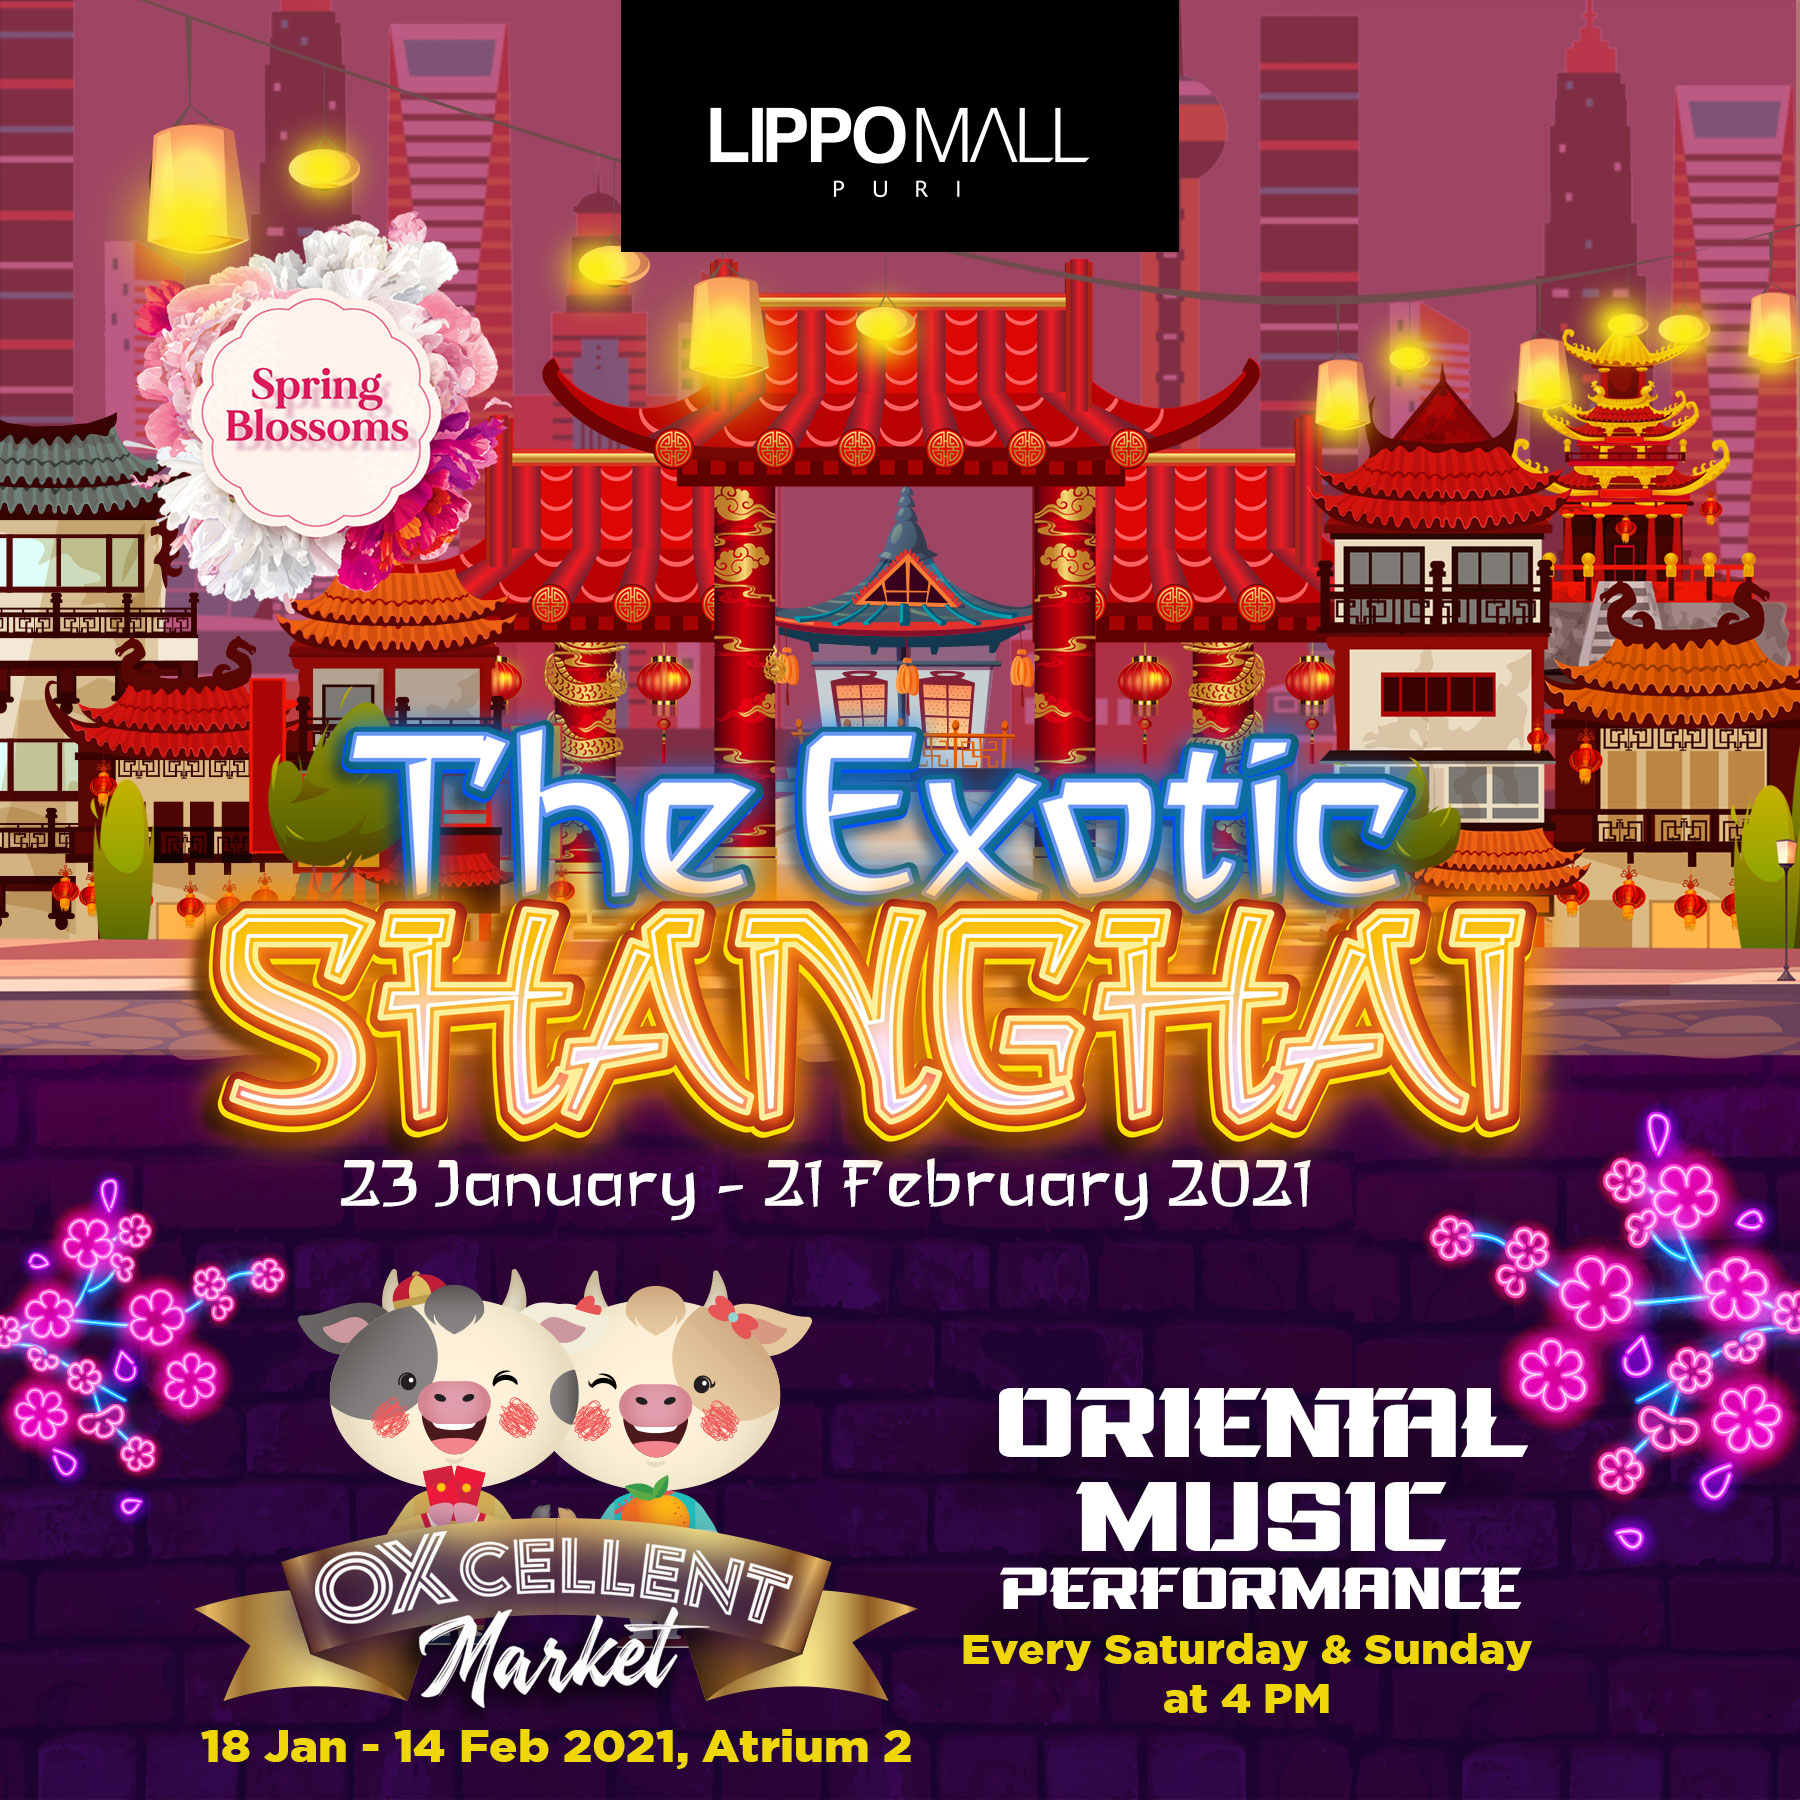 The Exotic Shanghai Promo in lippo mall puri st. moritz